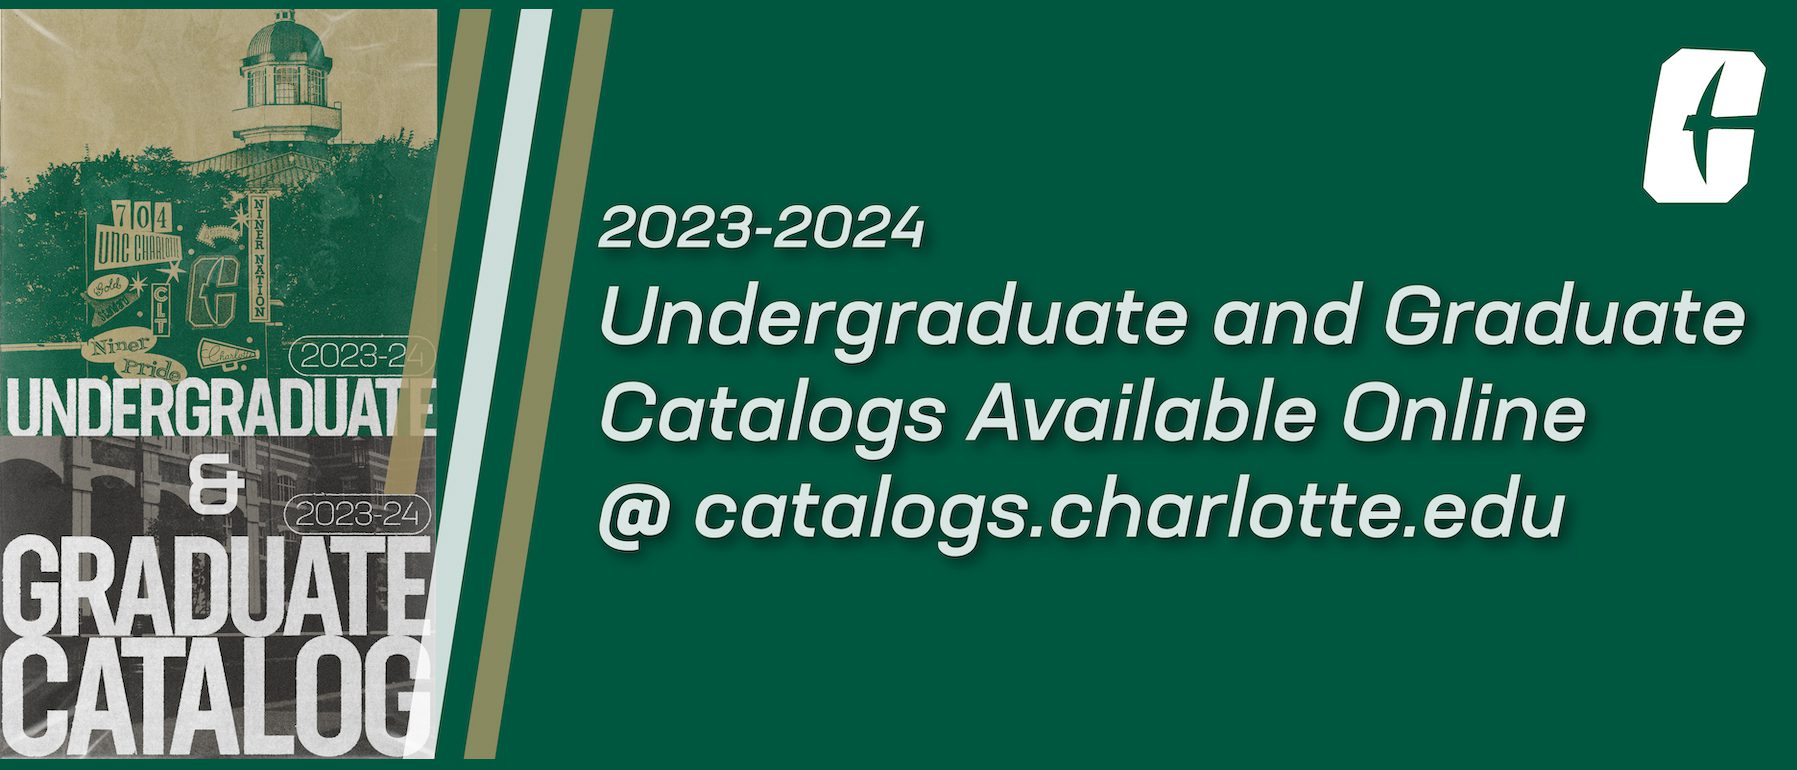 2023 Undergraduate and Graduate Catalogs Available